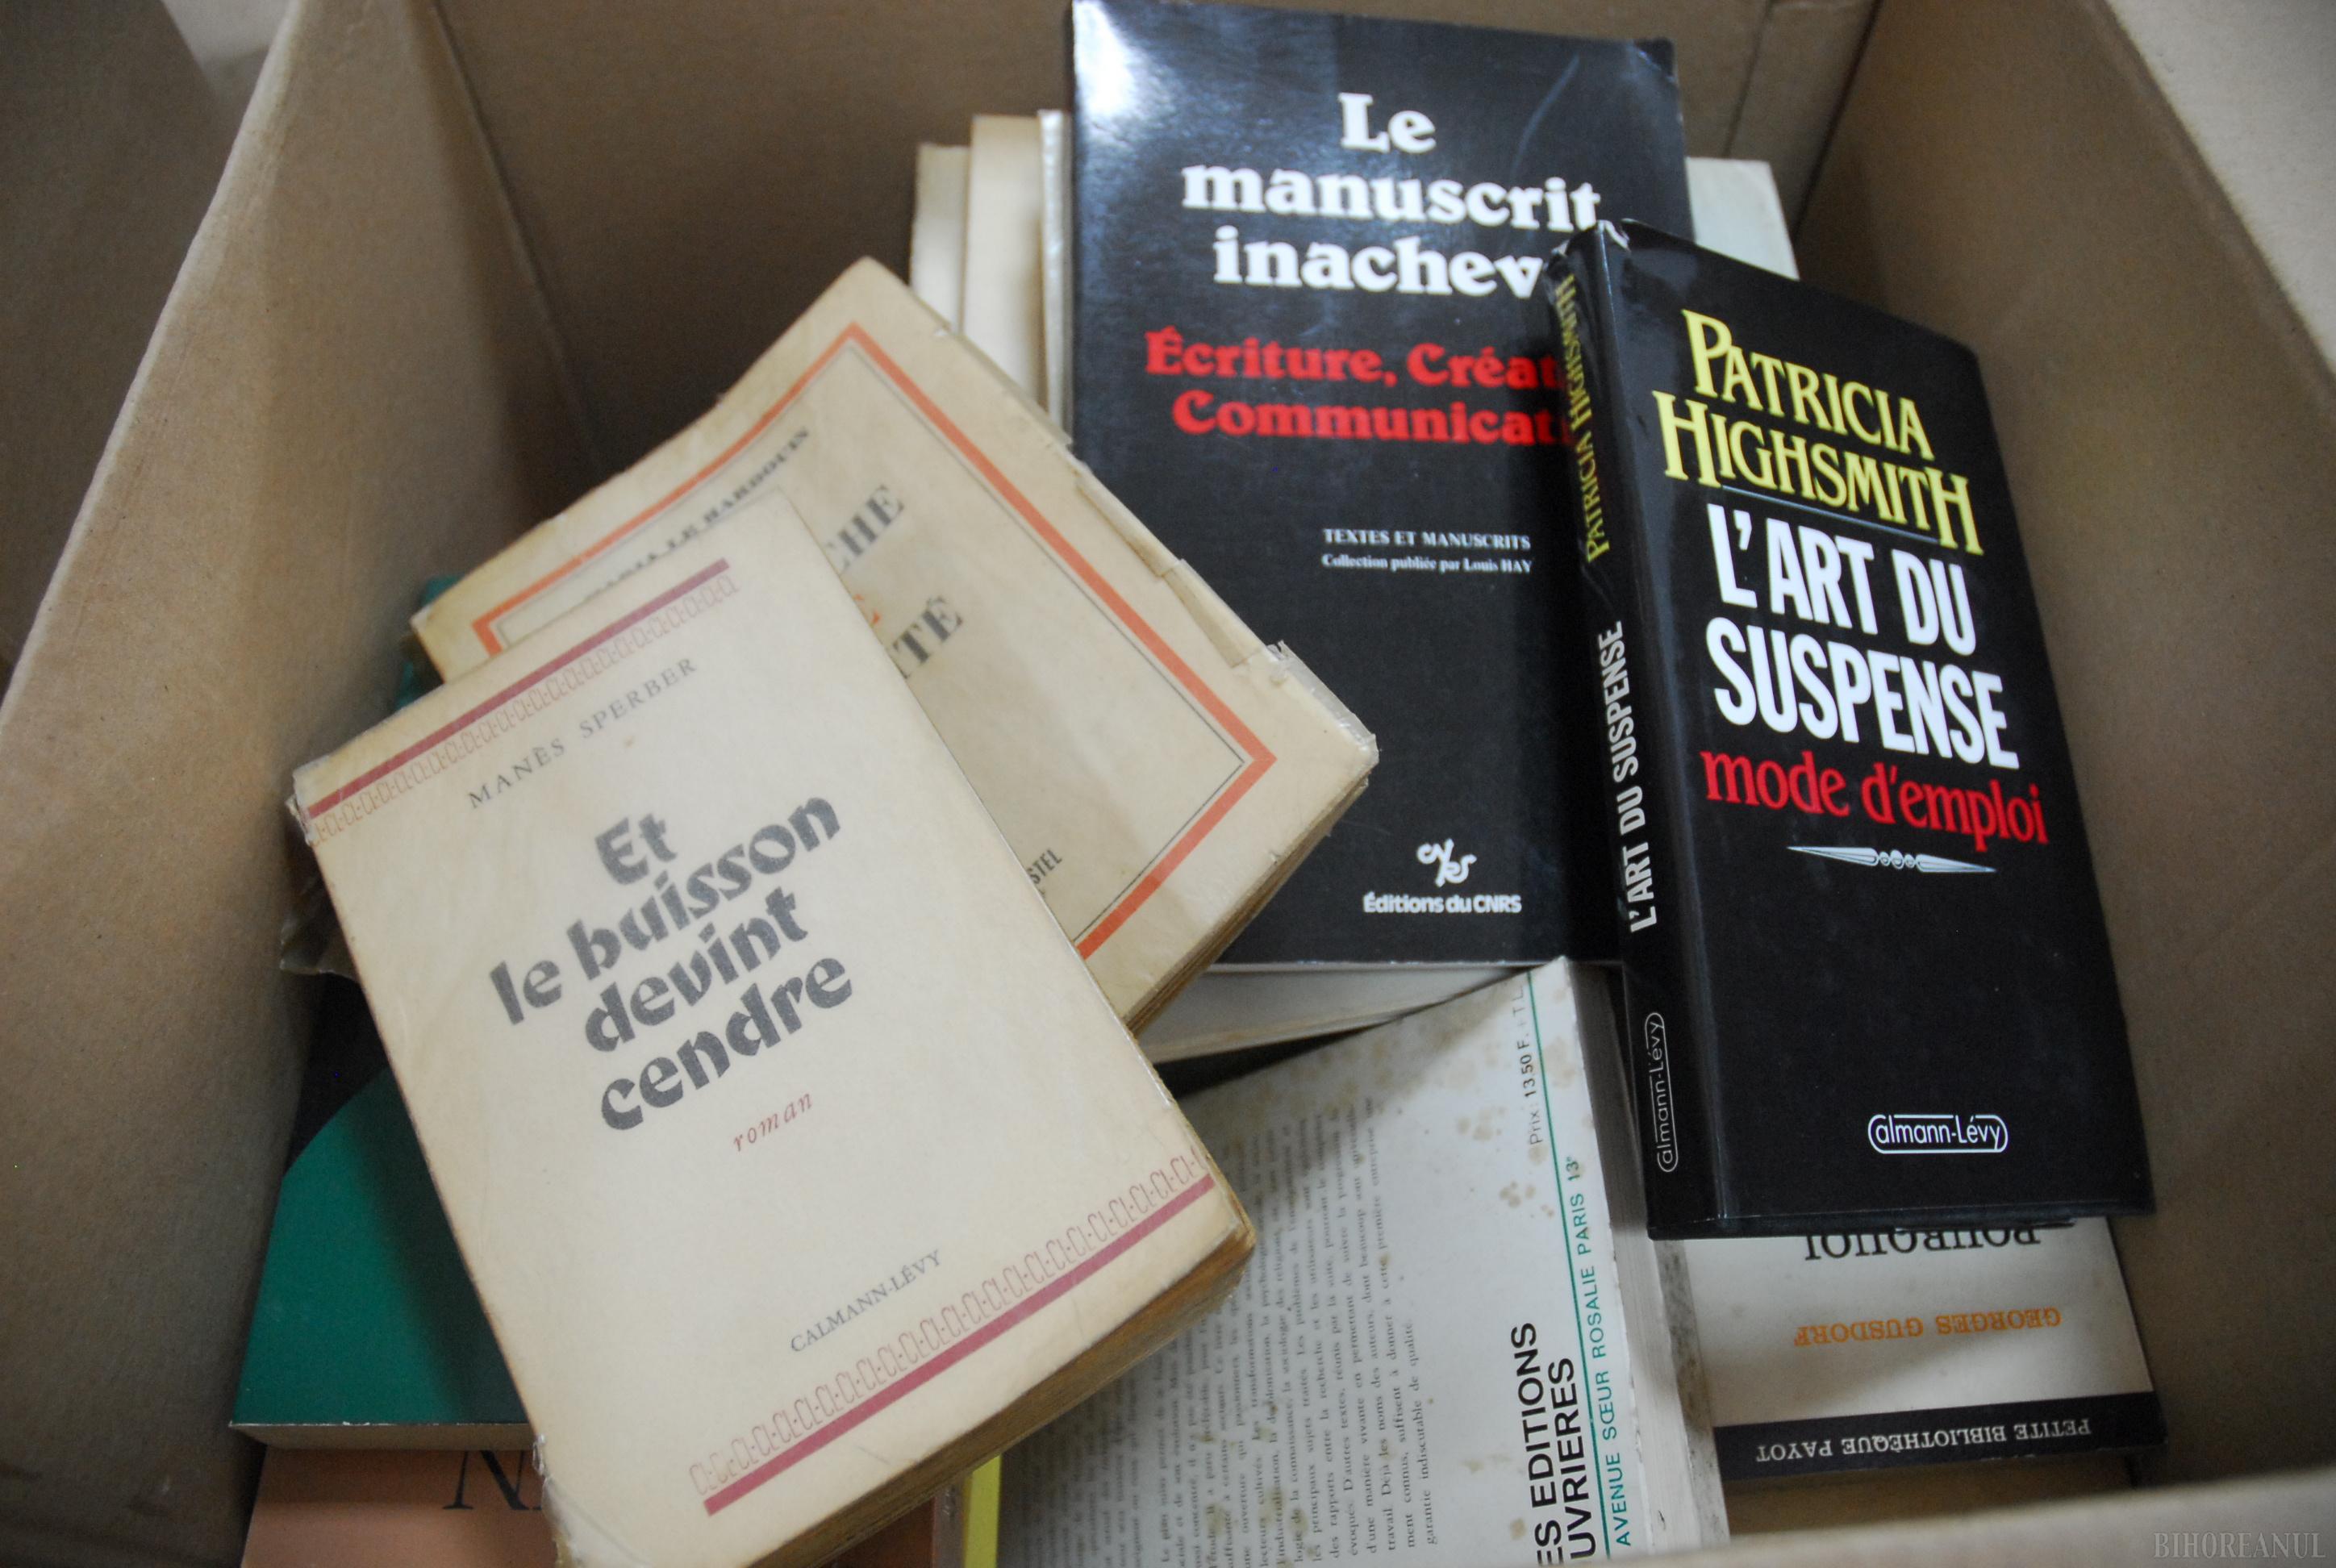 A box full of books from Monica Lovinescu-Virgil Ierunca Collection